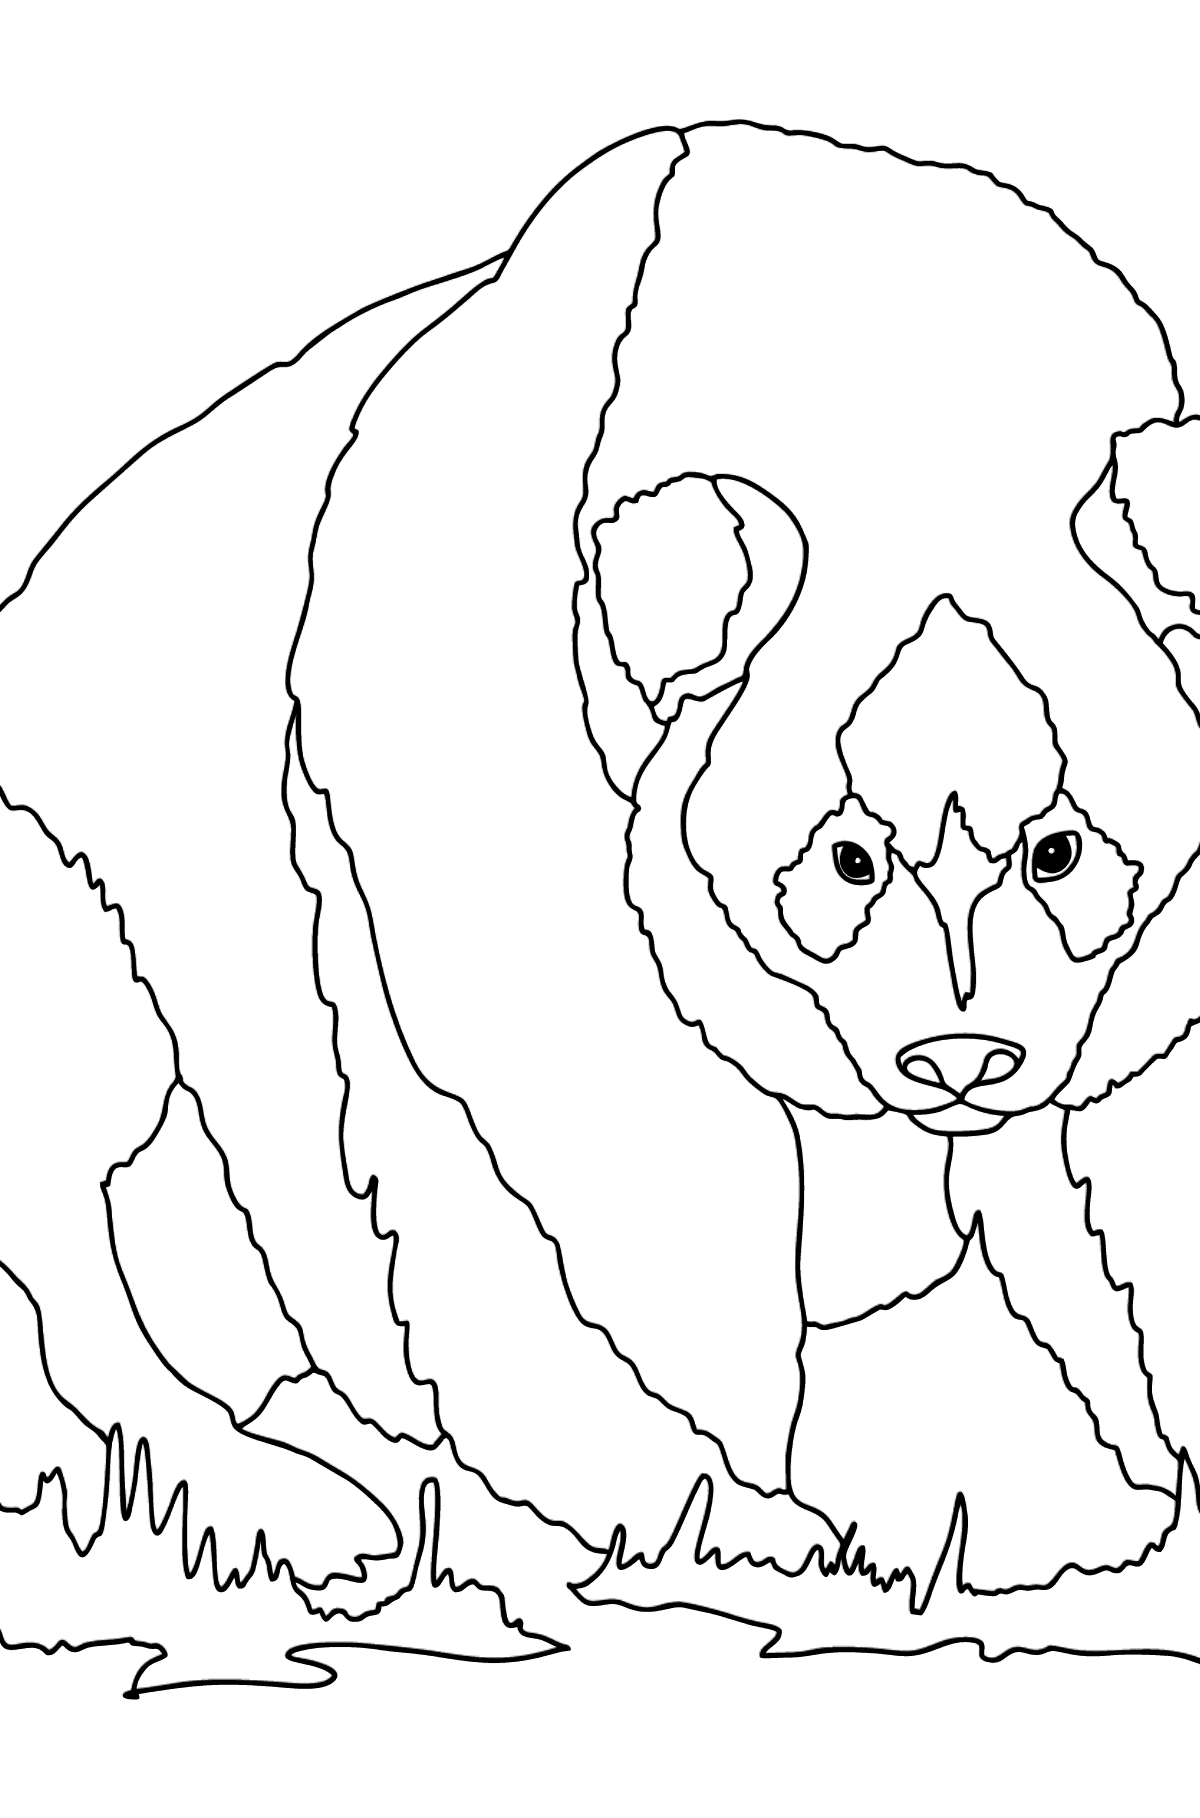 Dibujo para Colorear - Un Panda está de Caza - Dibujos para Colorear para Niños